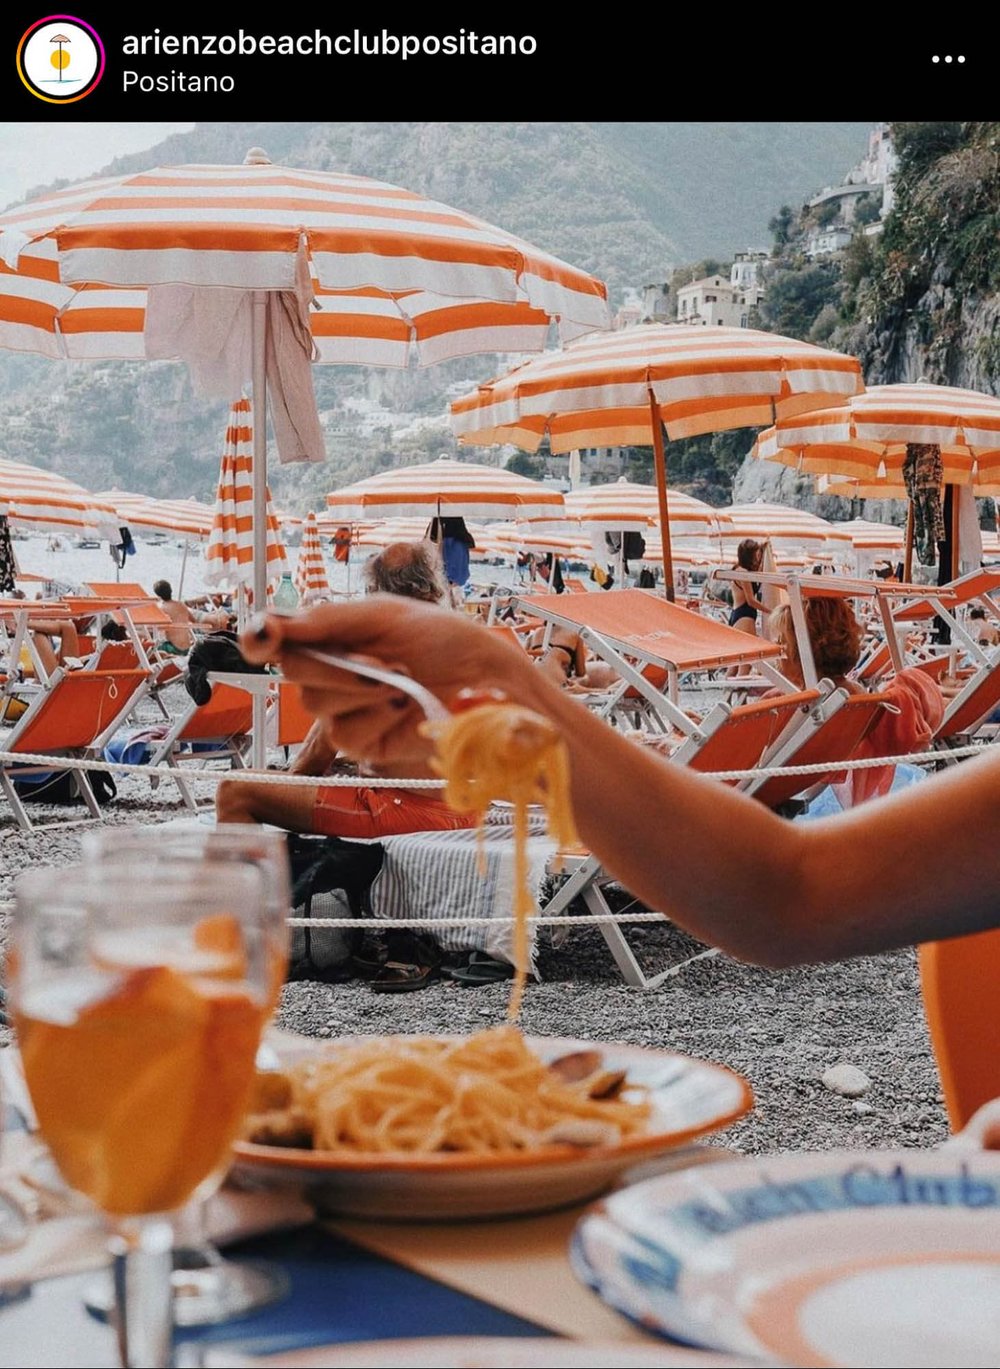 Arienzo Beach Positano is home to the best Amalfi Coast beach clubs